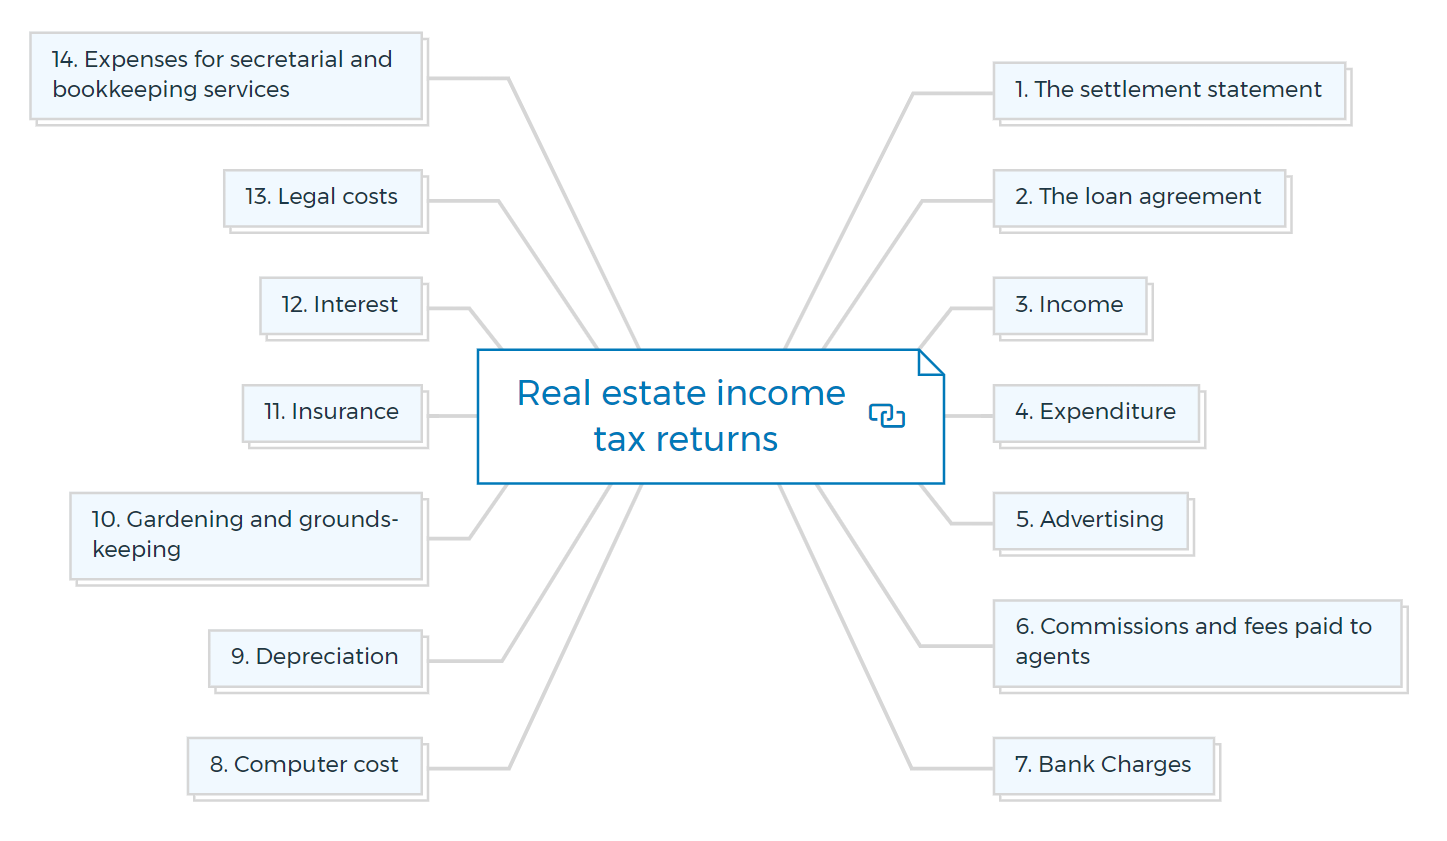 Real estate income tax returns